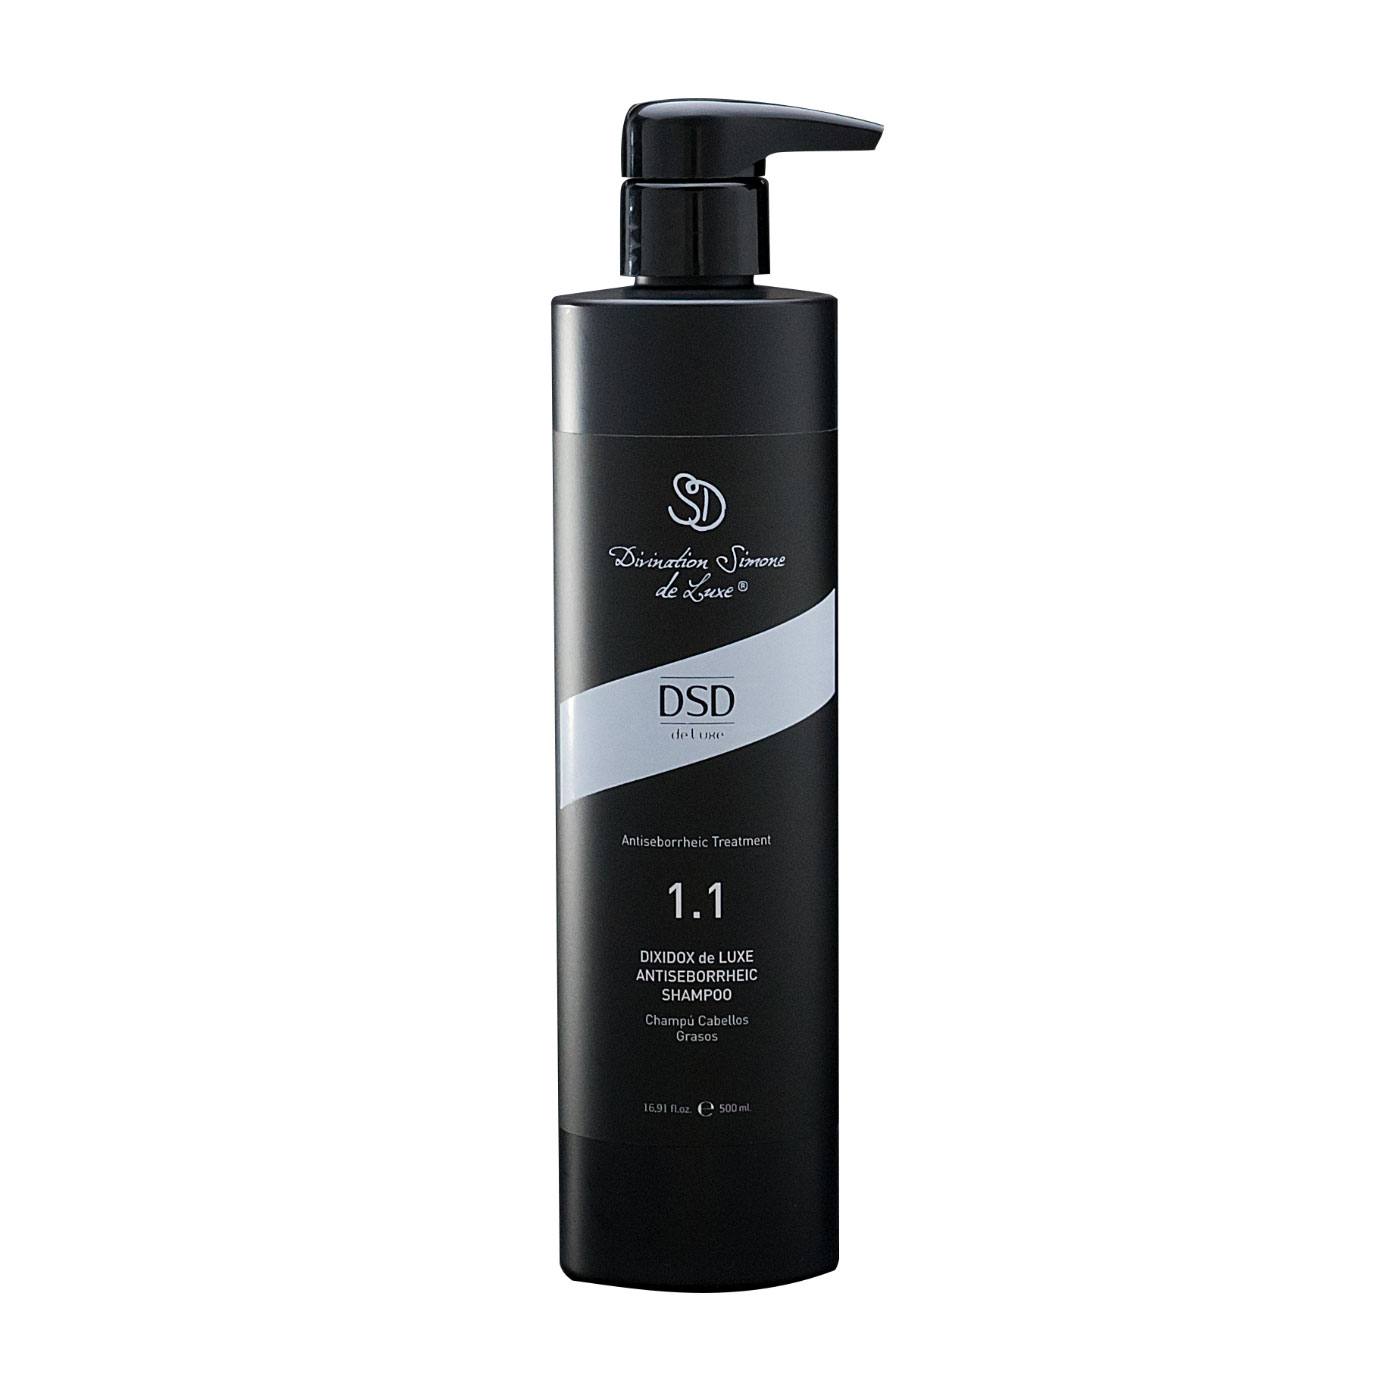 Dixidox De Luxe Antiseborrheic Shampoo 1.1